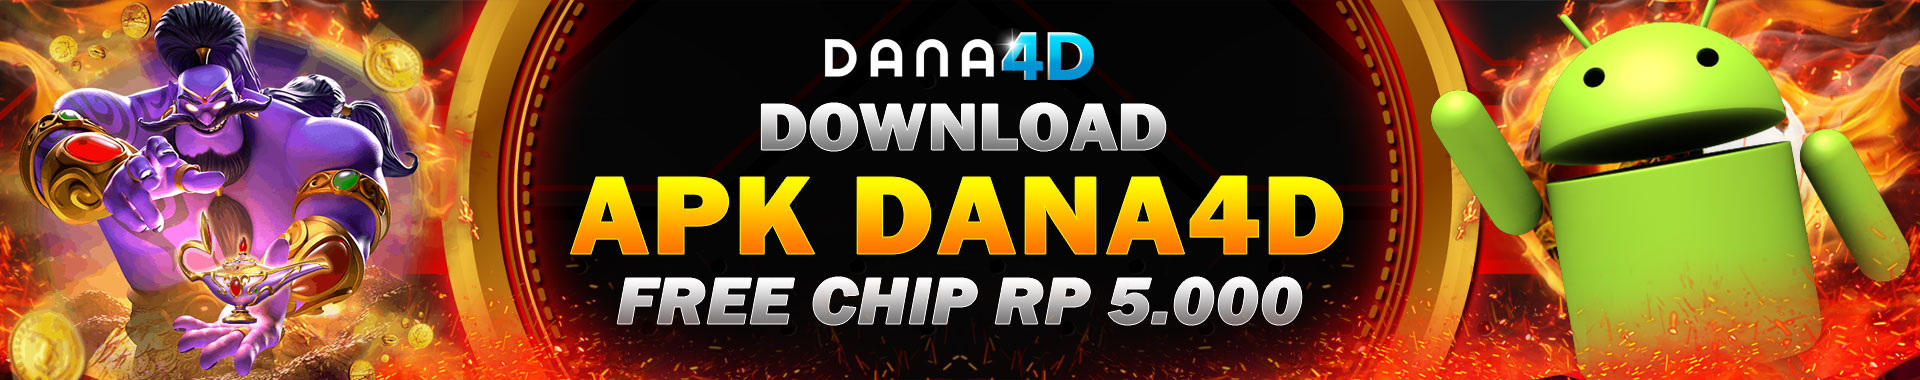 Download APK DANA4D FREE CHIP 5.000